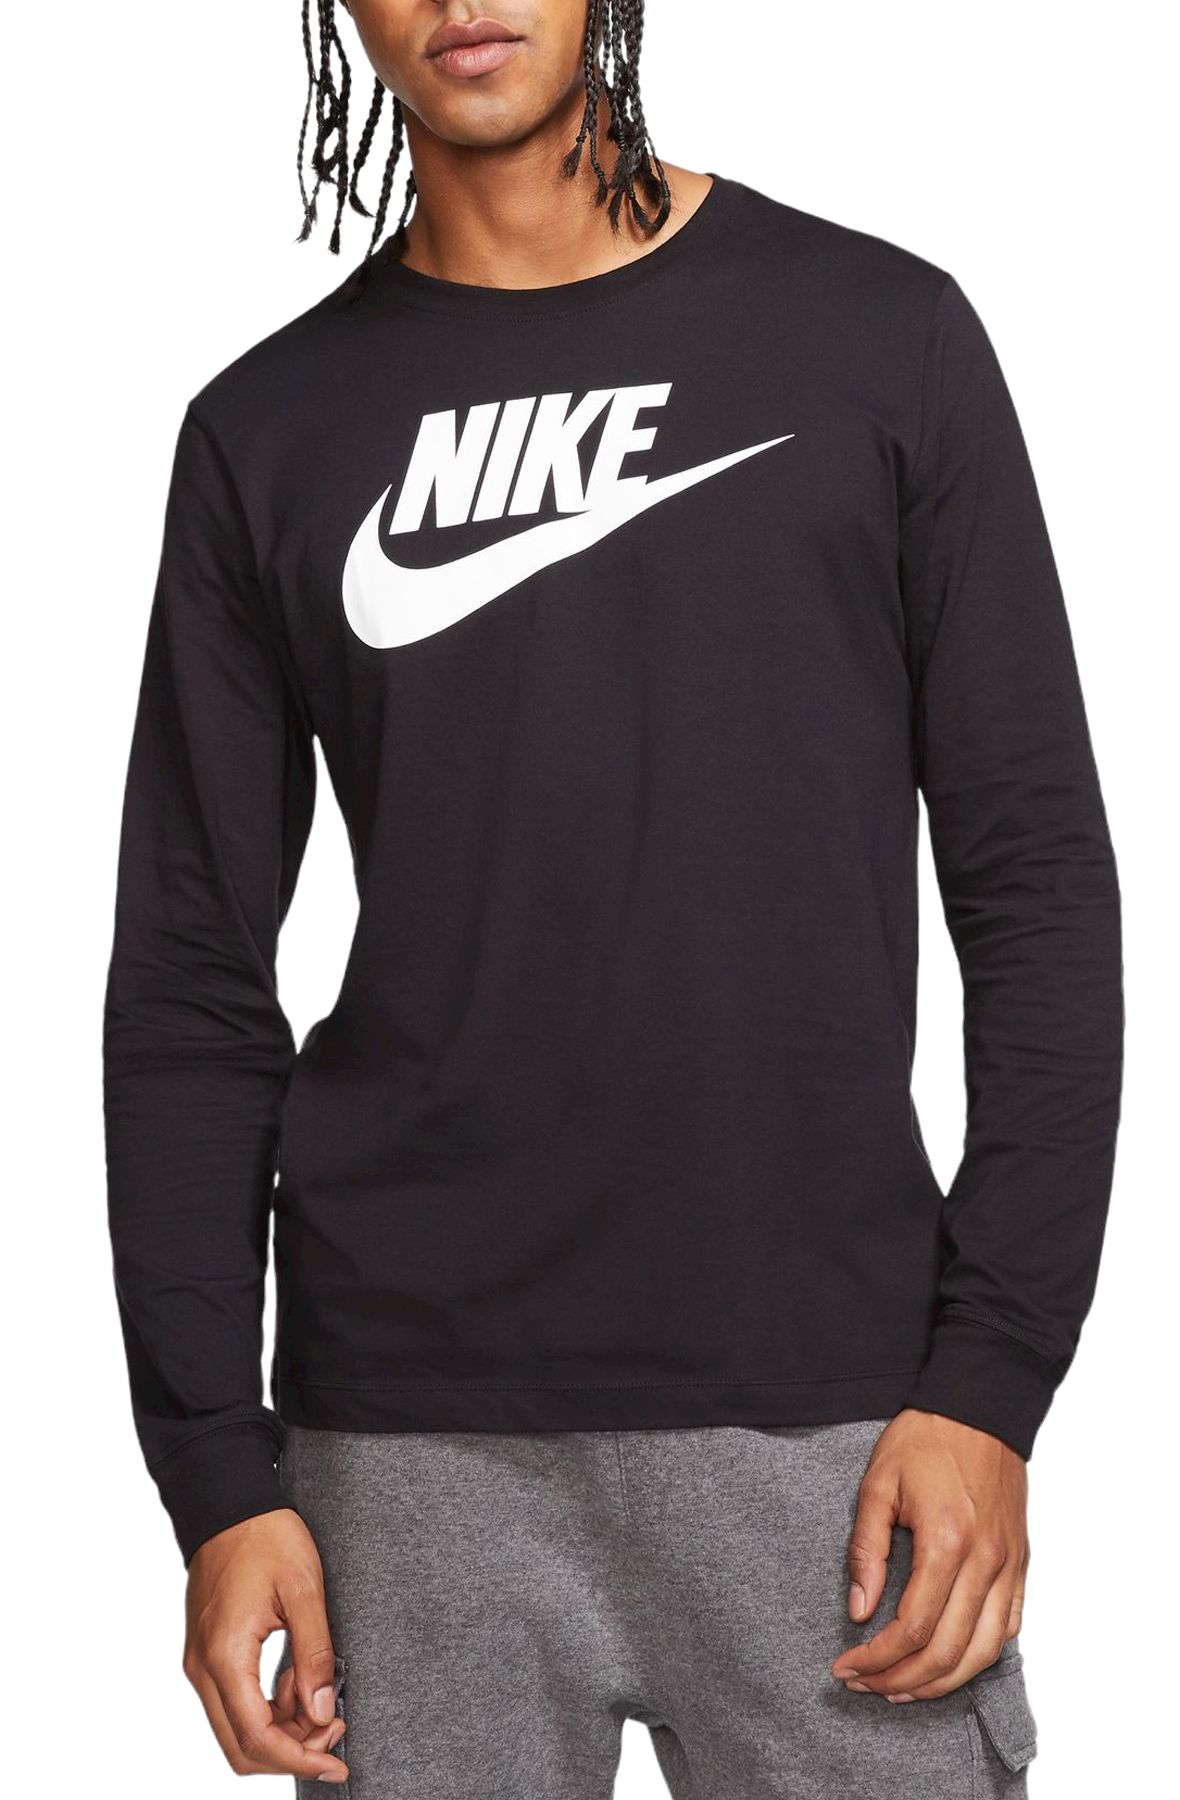 NIKE Sportswear Long-Sleeve T-Shirt CI6291 010 - Shiekh